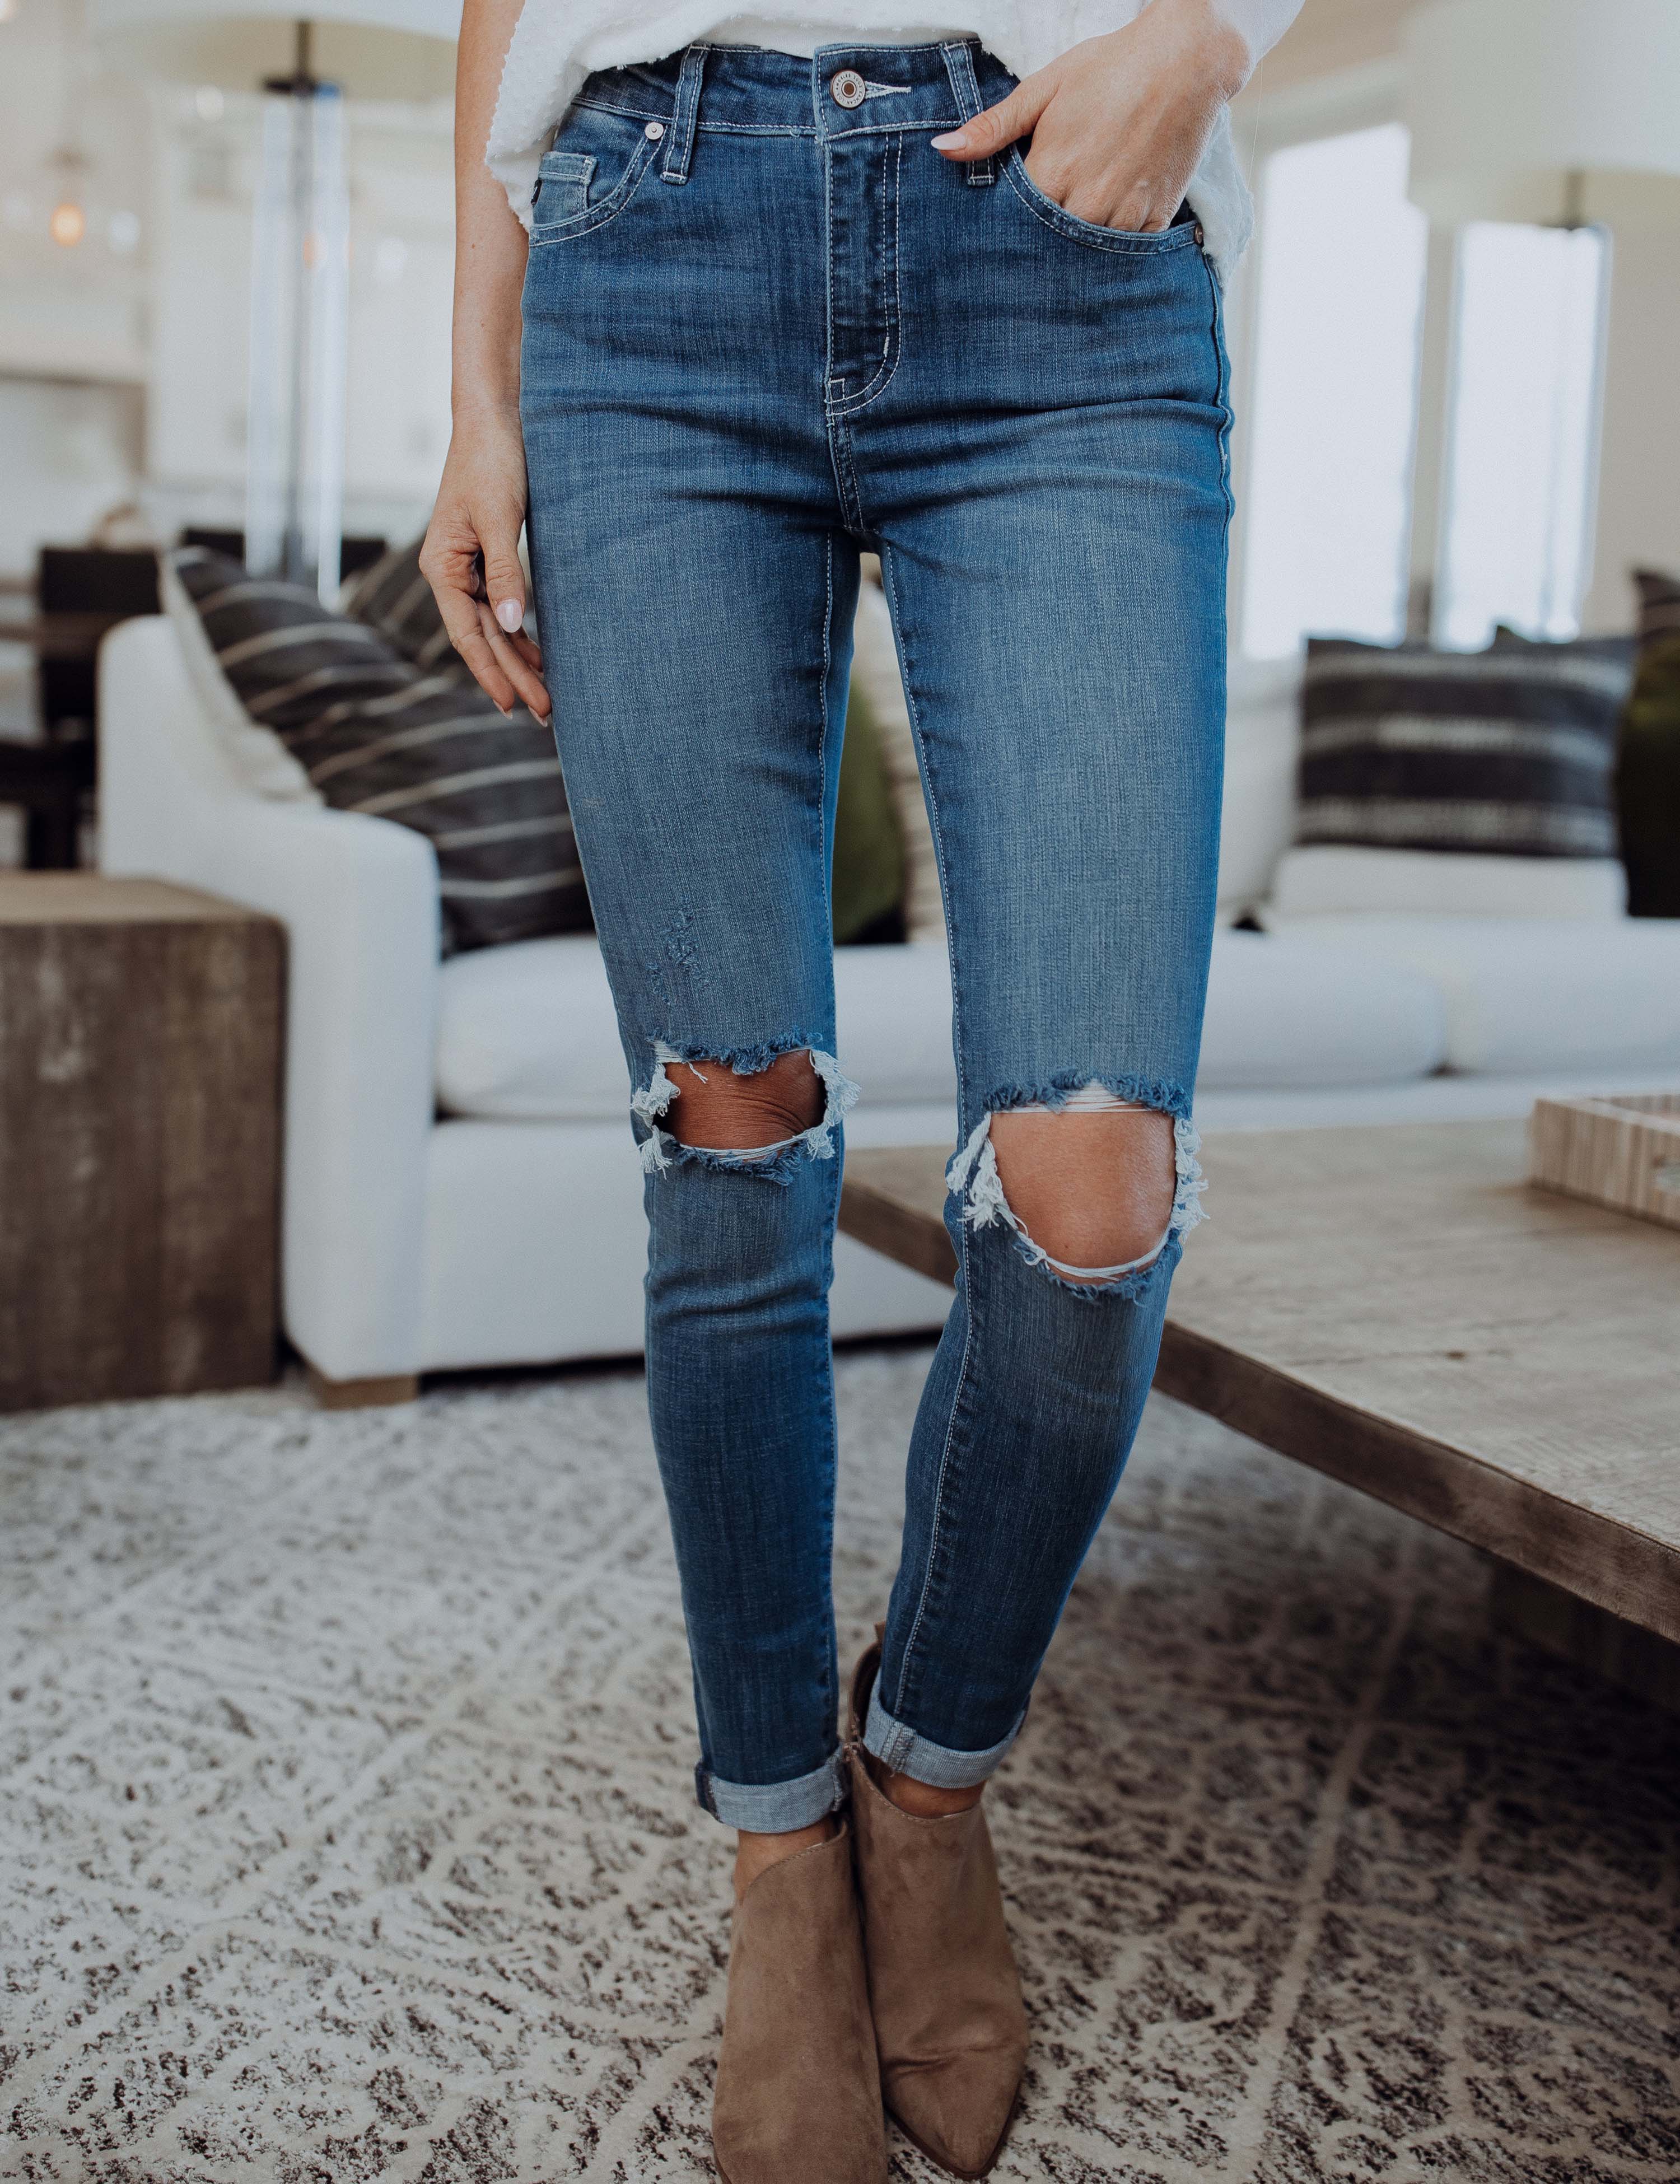 😍 KanCan designer jeans at a fraction - Simple Addiction